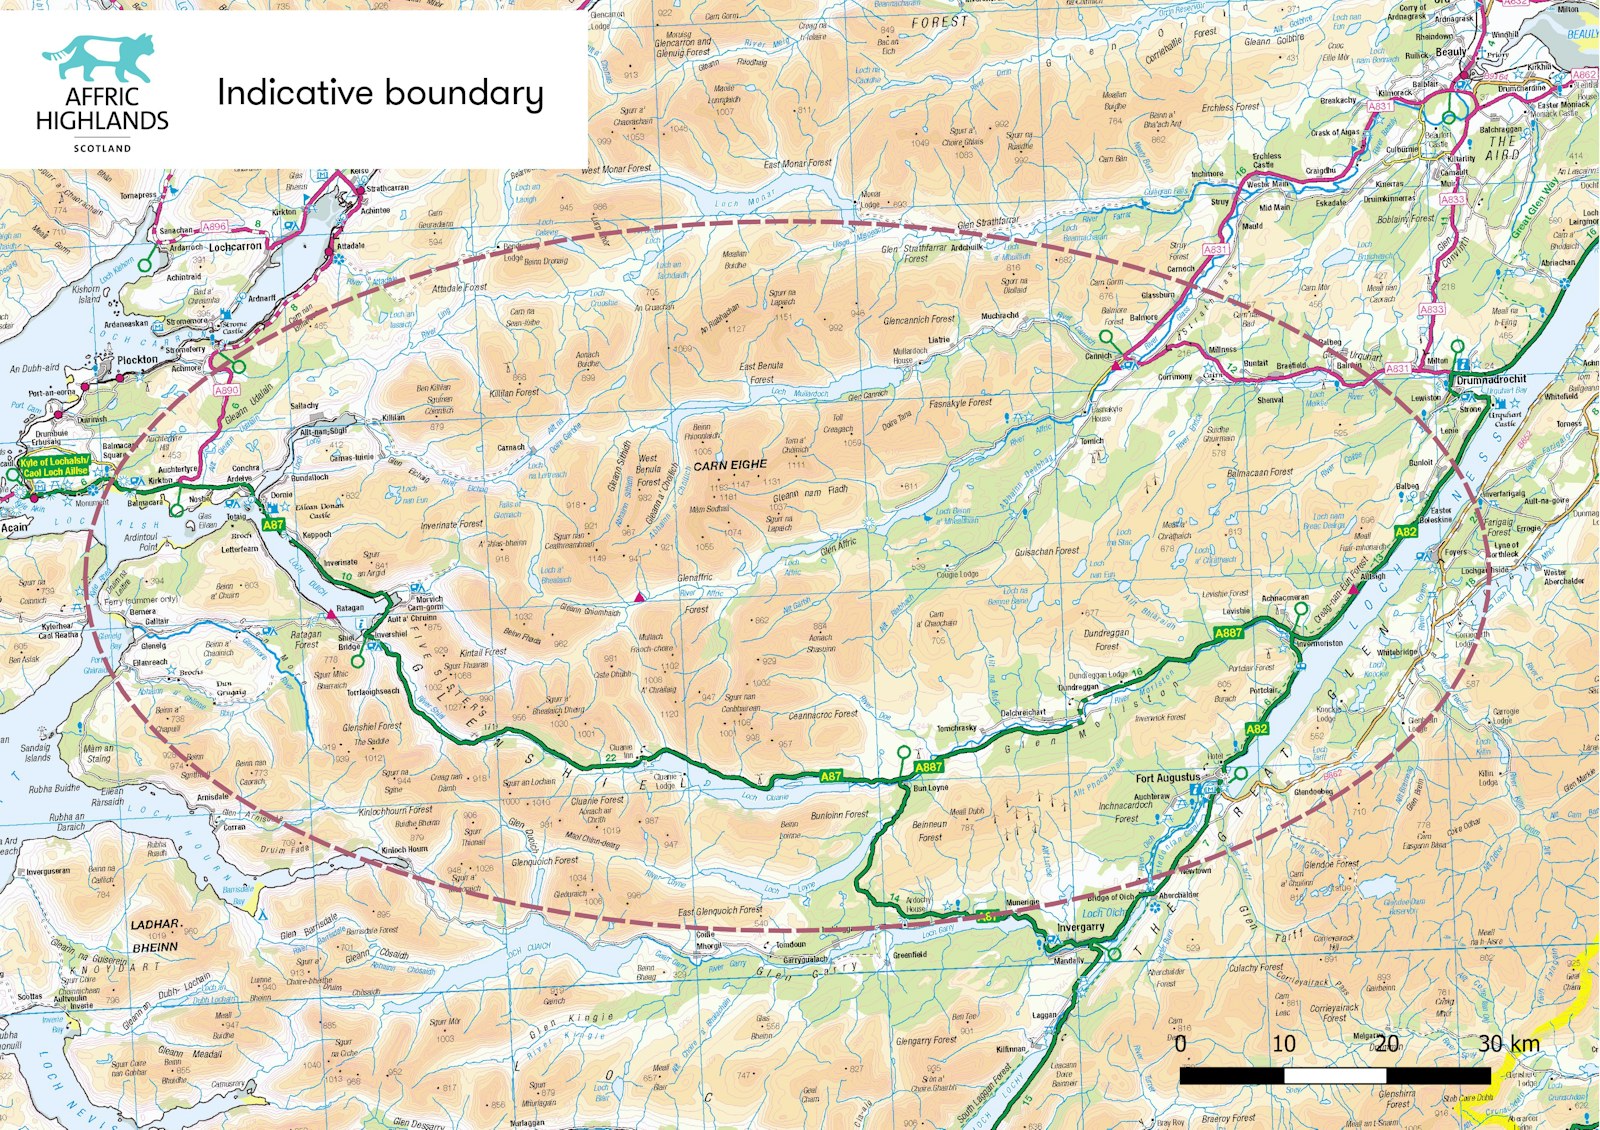 Affric Highlands boundary map